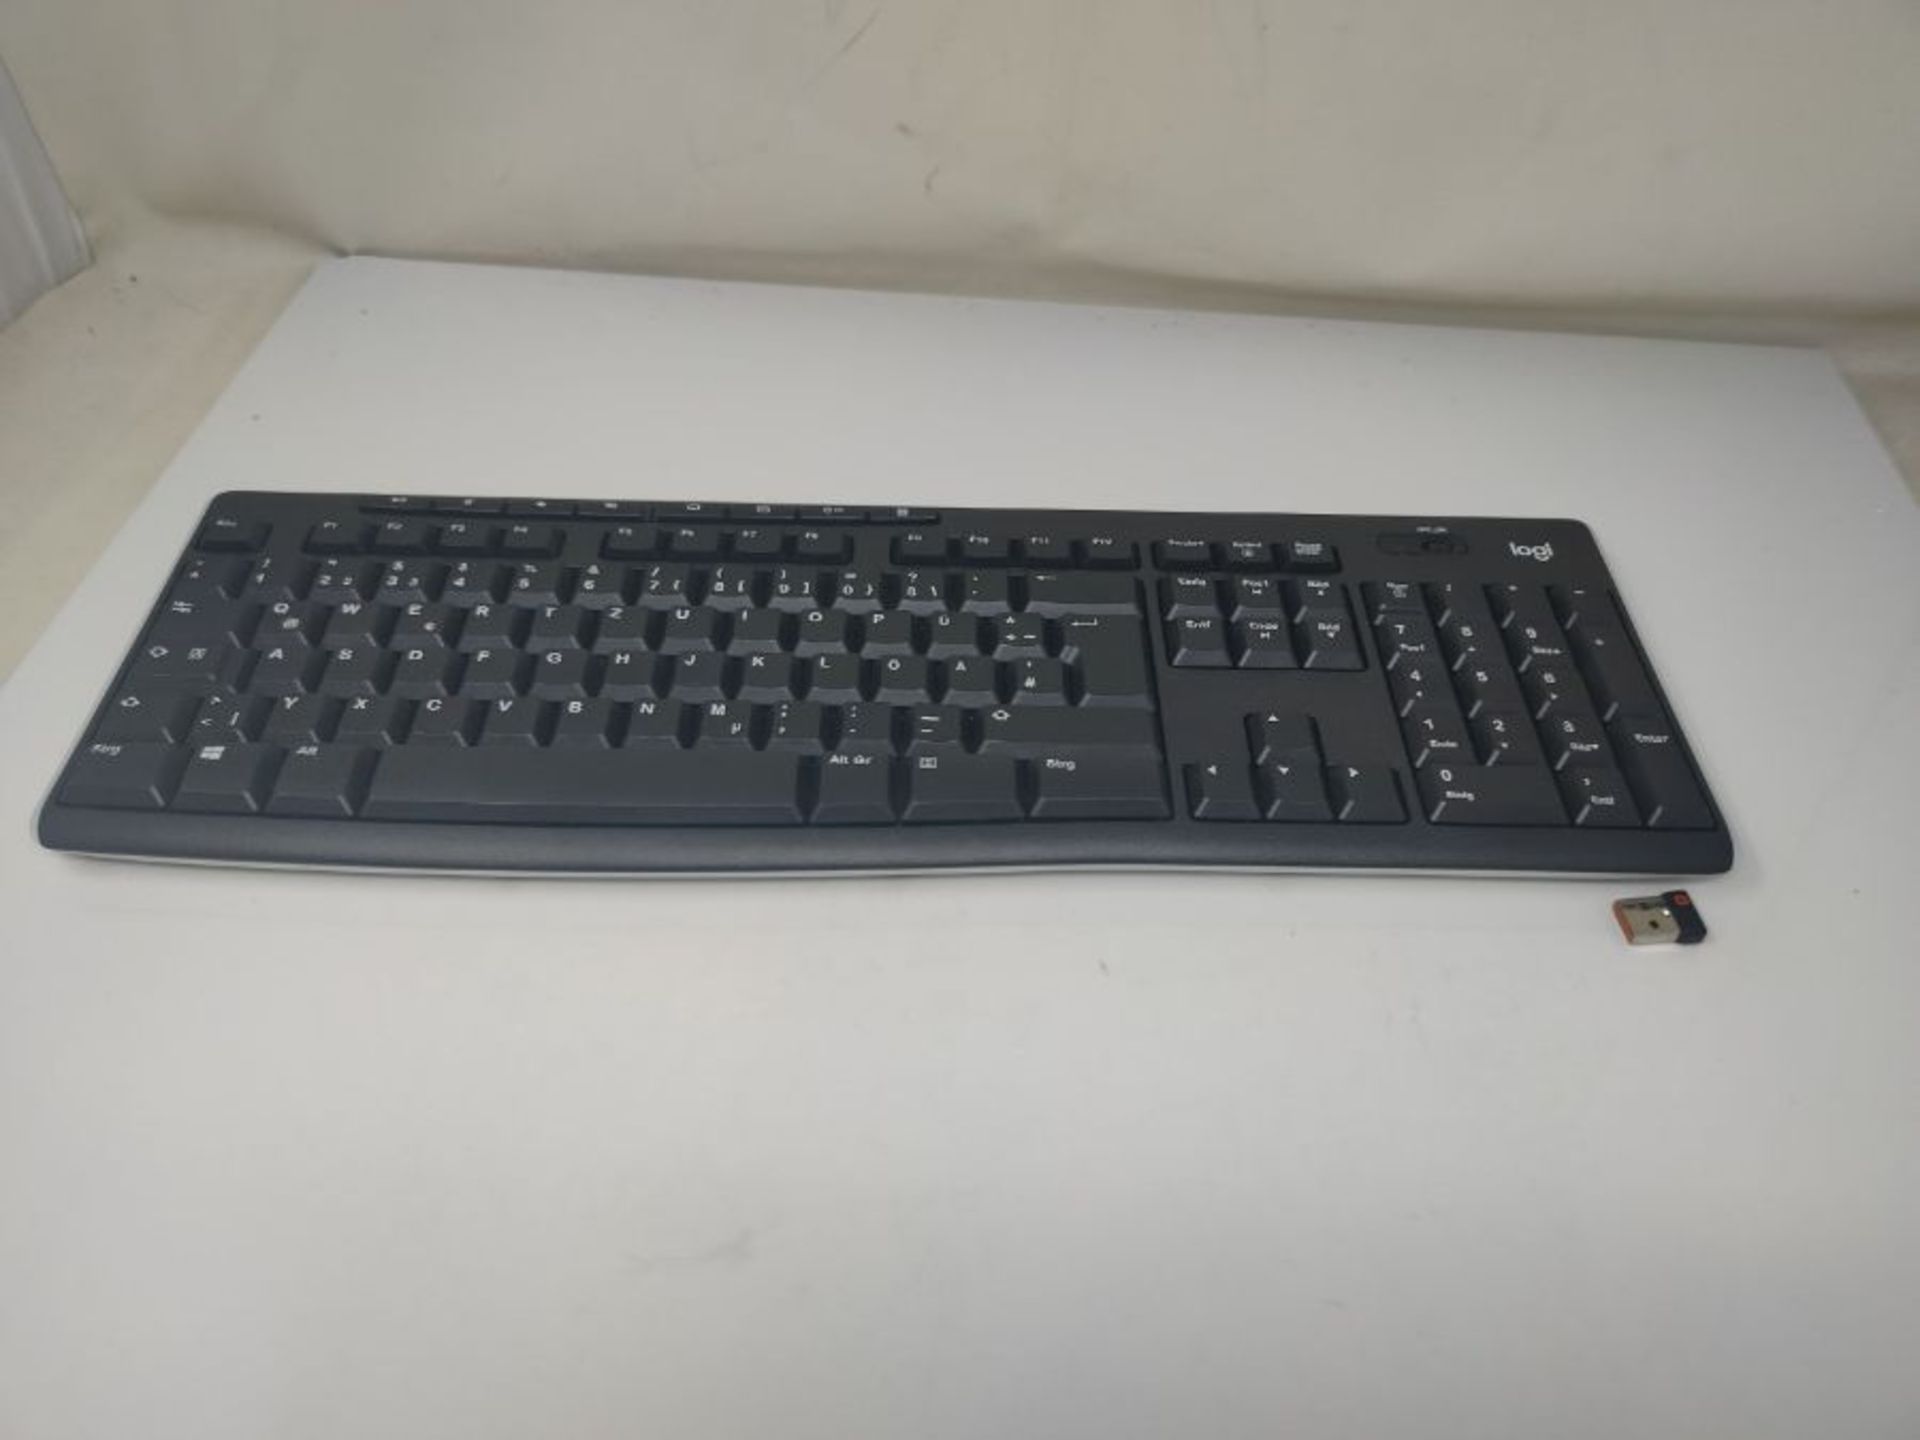 Logitech K270 Wireless Keyboard for Windows, QWERTZ German Layout - Black - Image 3 of 3